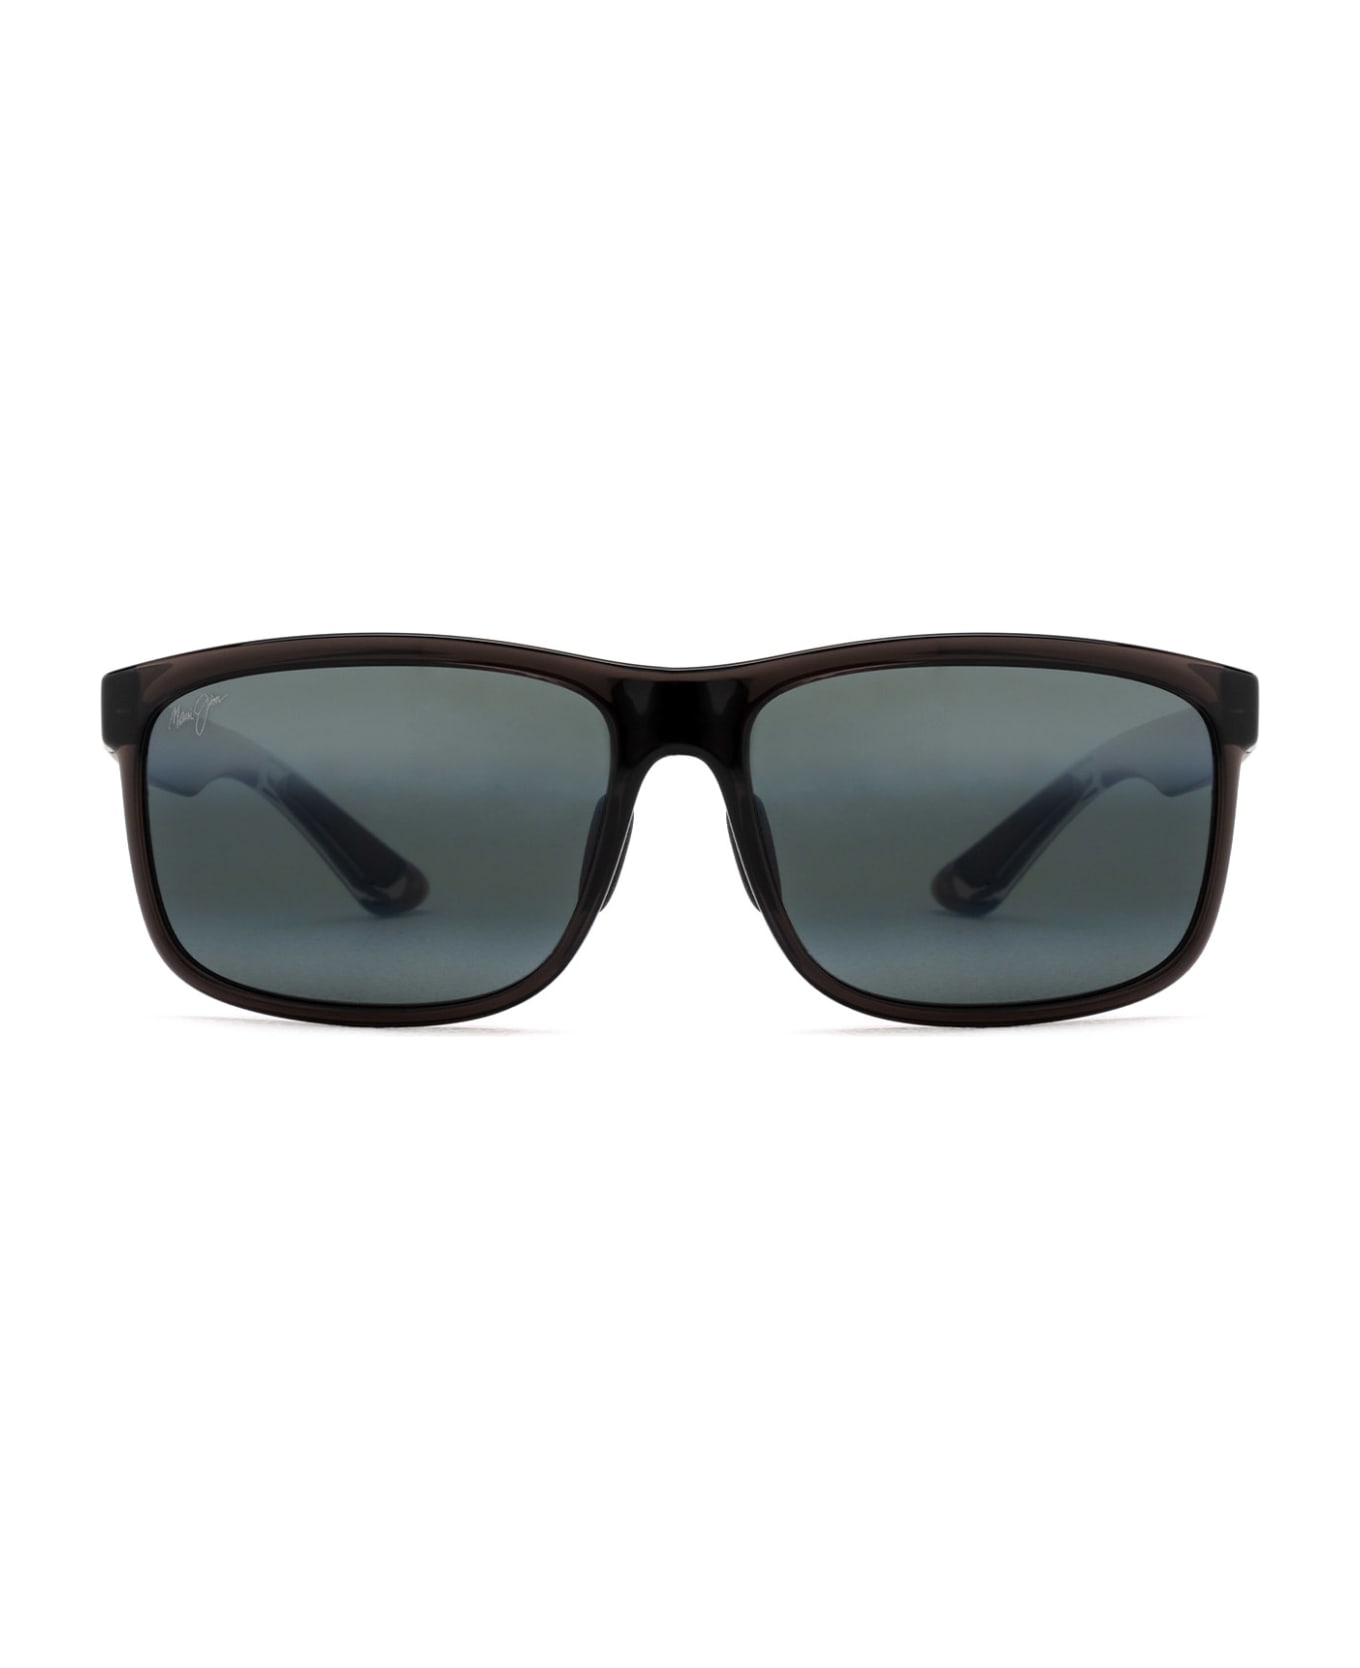 Maui Jim Mj449 Translucent Grey Sunglasses - Translucent Grey